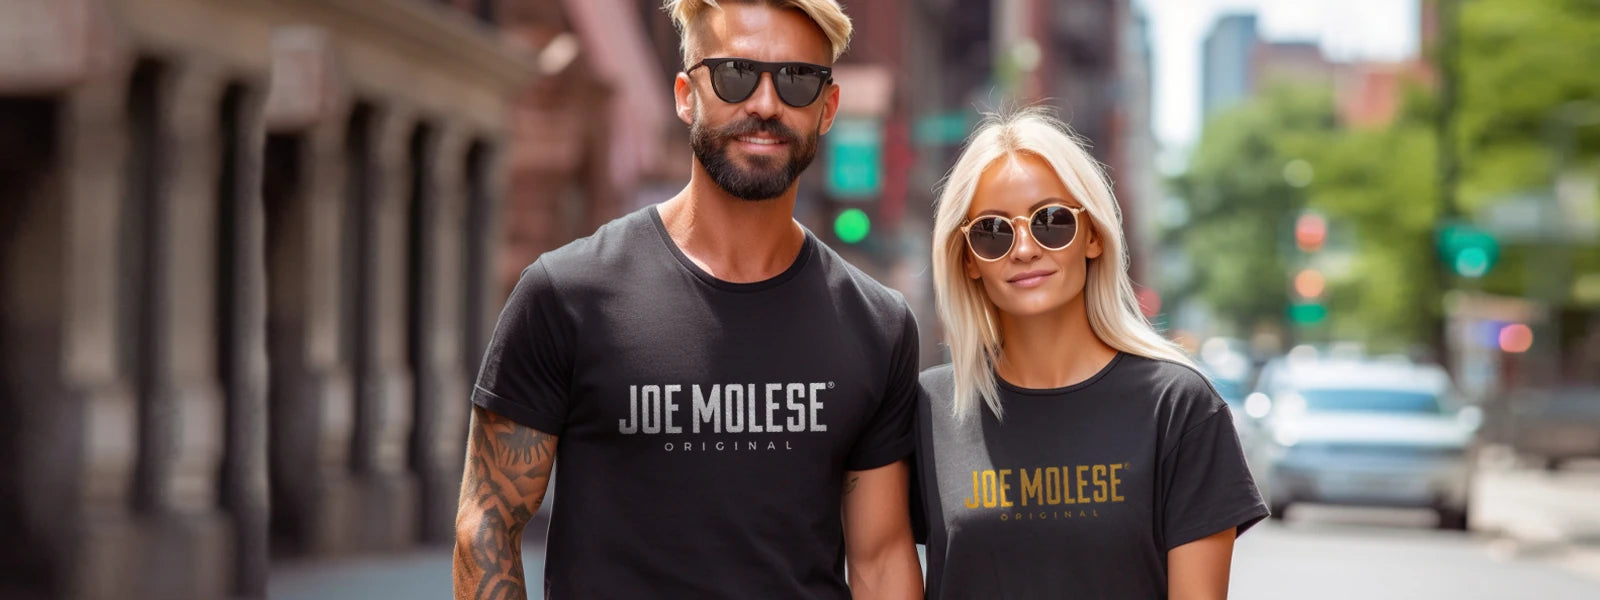 Joe Molese Offizieller Store - T-Shirts & Hoodies nachhaltig und fair hergestellt